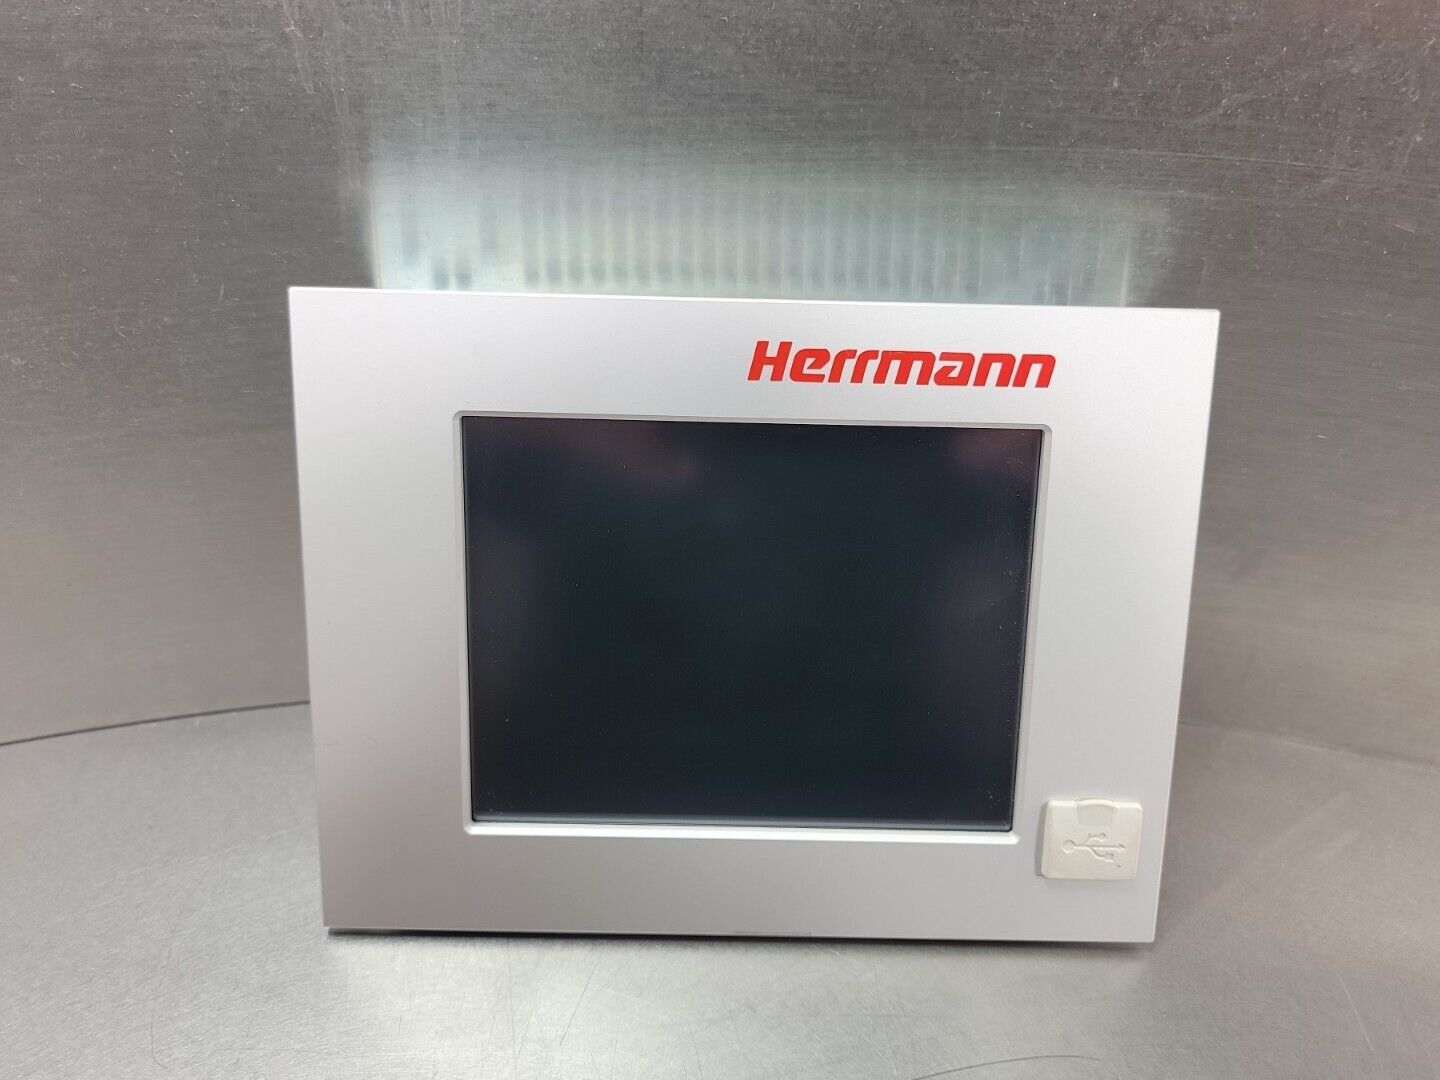 New Herrmann EinbauTerminal Varan ETV0555 HW:4.20x1.1 Ultrasonic Panel loc.2A